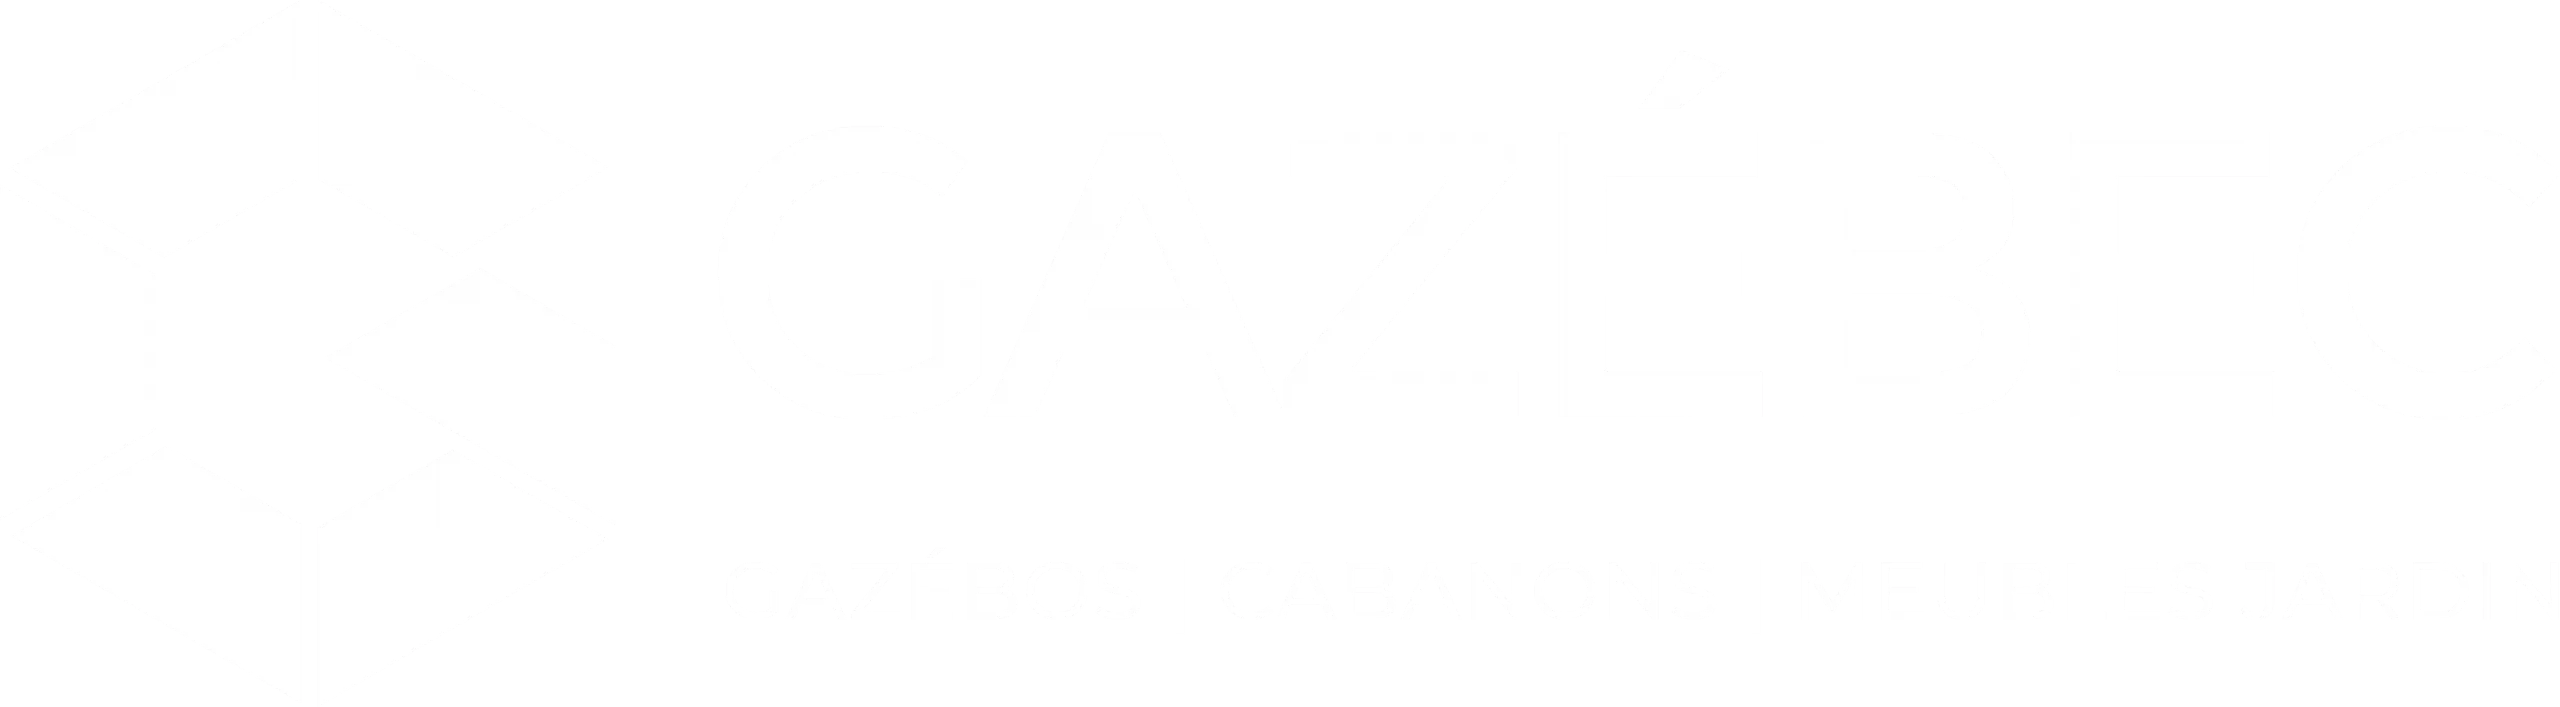 Logo Gazébec - Gazebo - Cabanon et meubles jardin